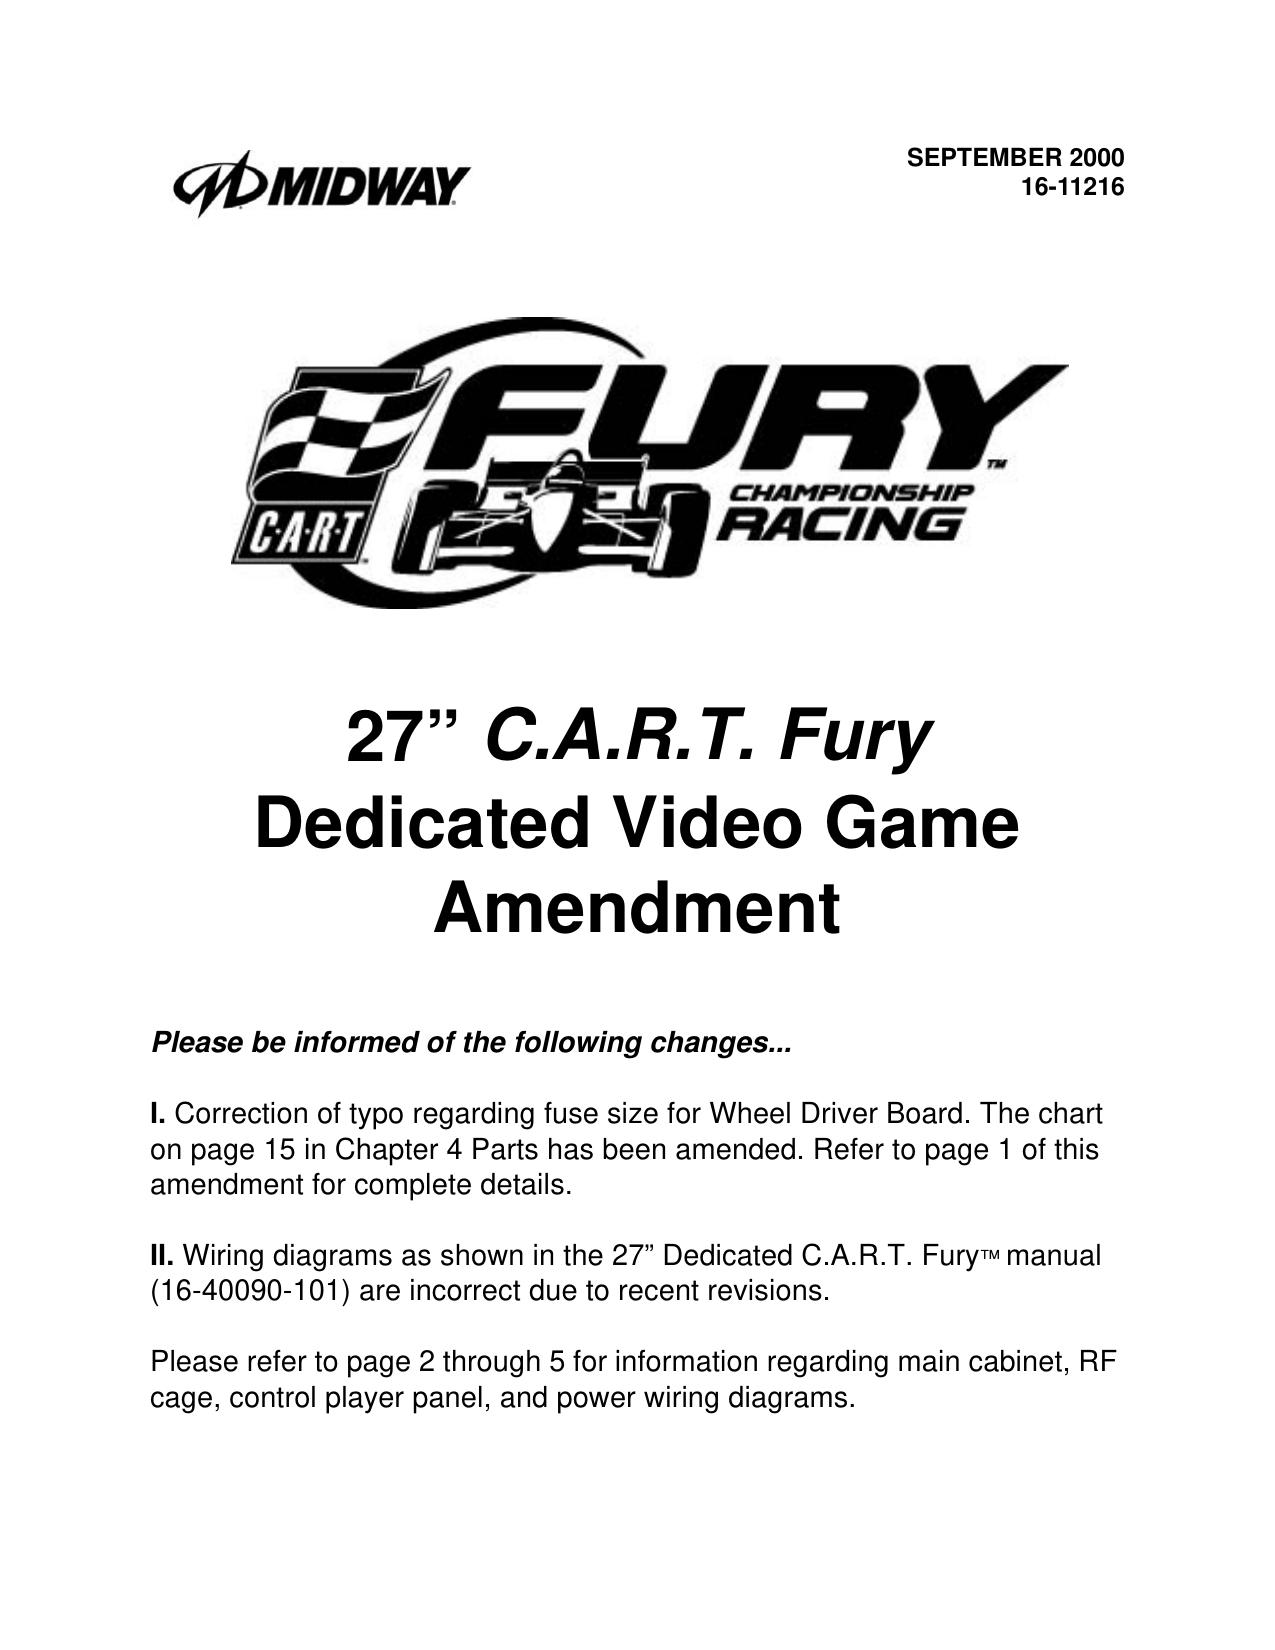 Kart Fury (27in) (Manual Amendment) (U)